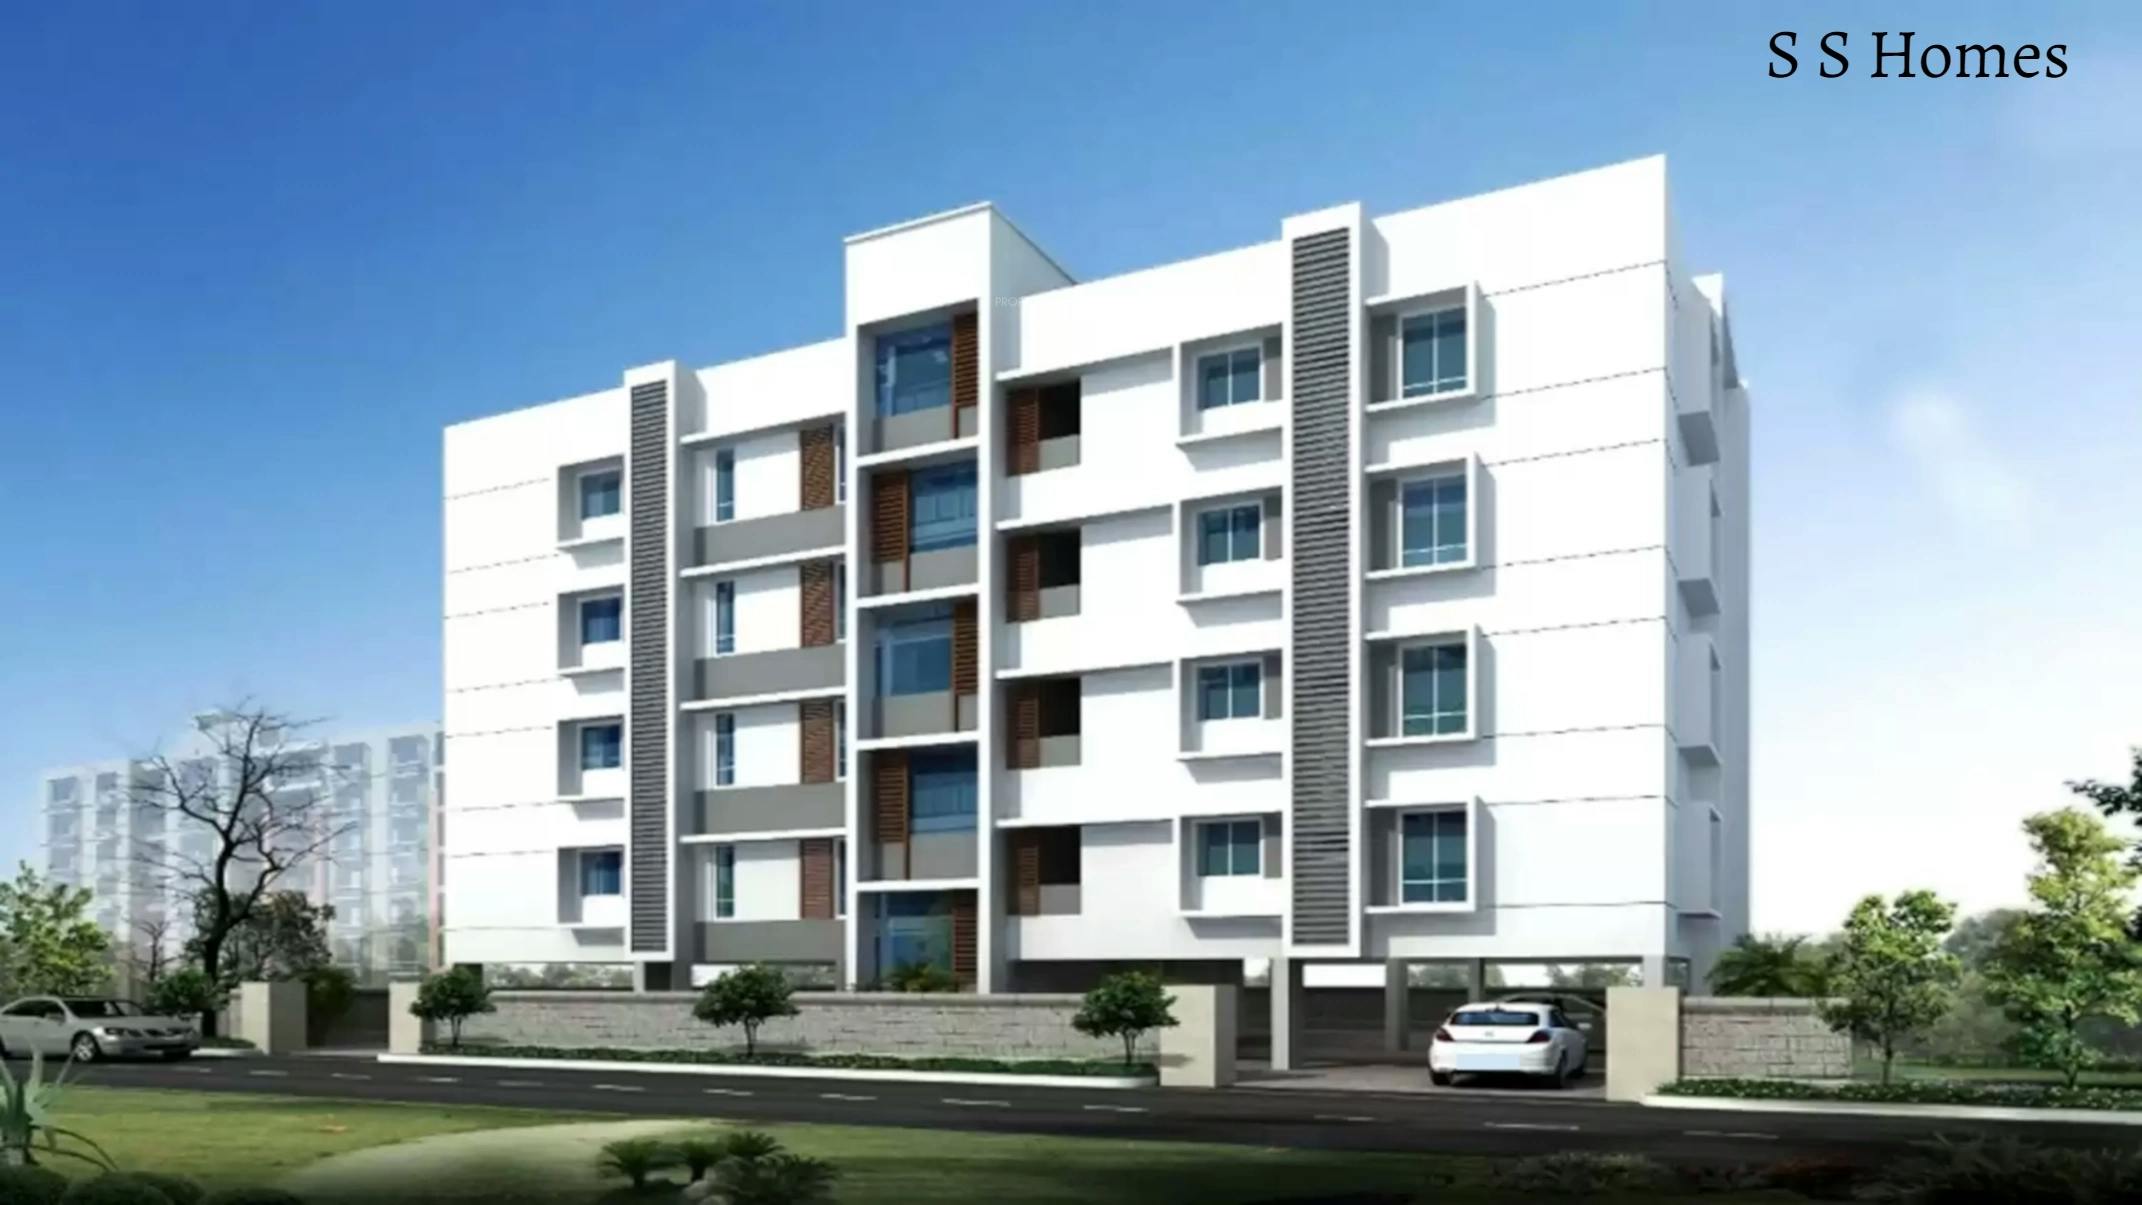 Floor plan for Uppalapati Venkataram Chakrawarthy S S Homes